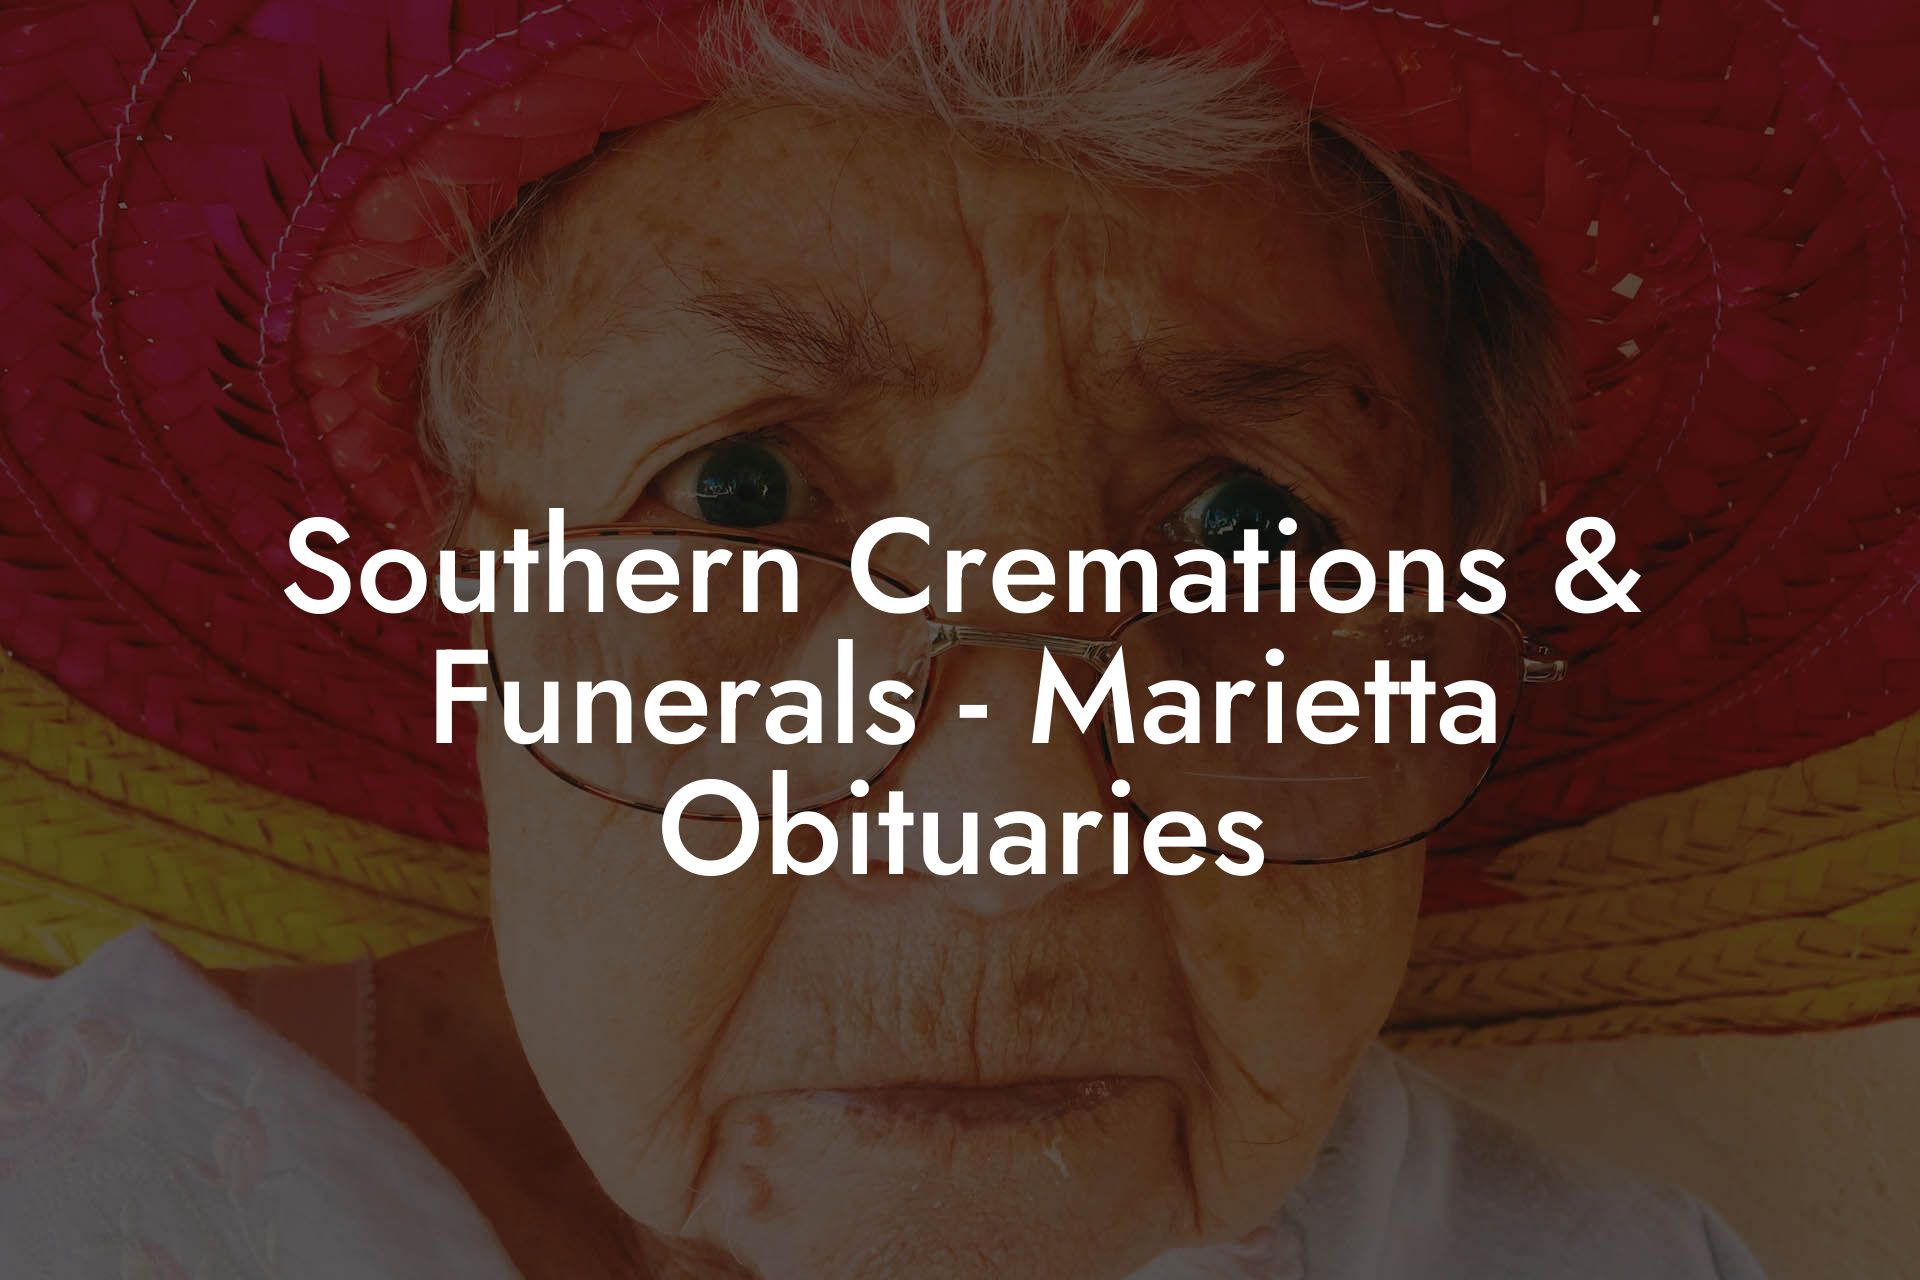 Southern Cremations & Funerals - Marietta Obituaries